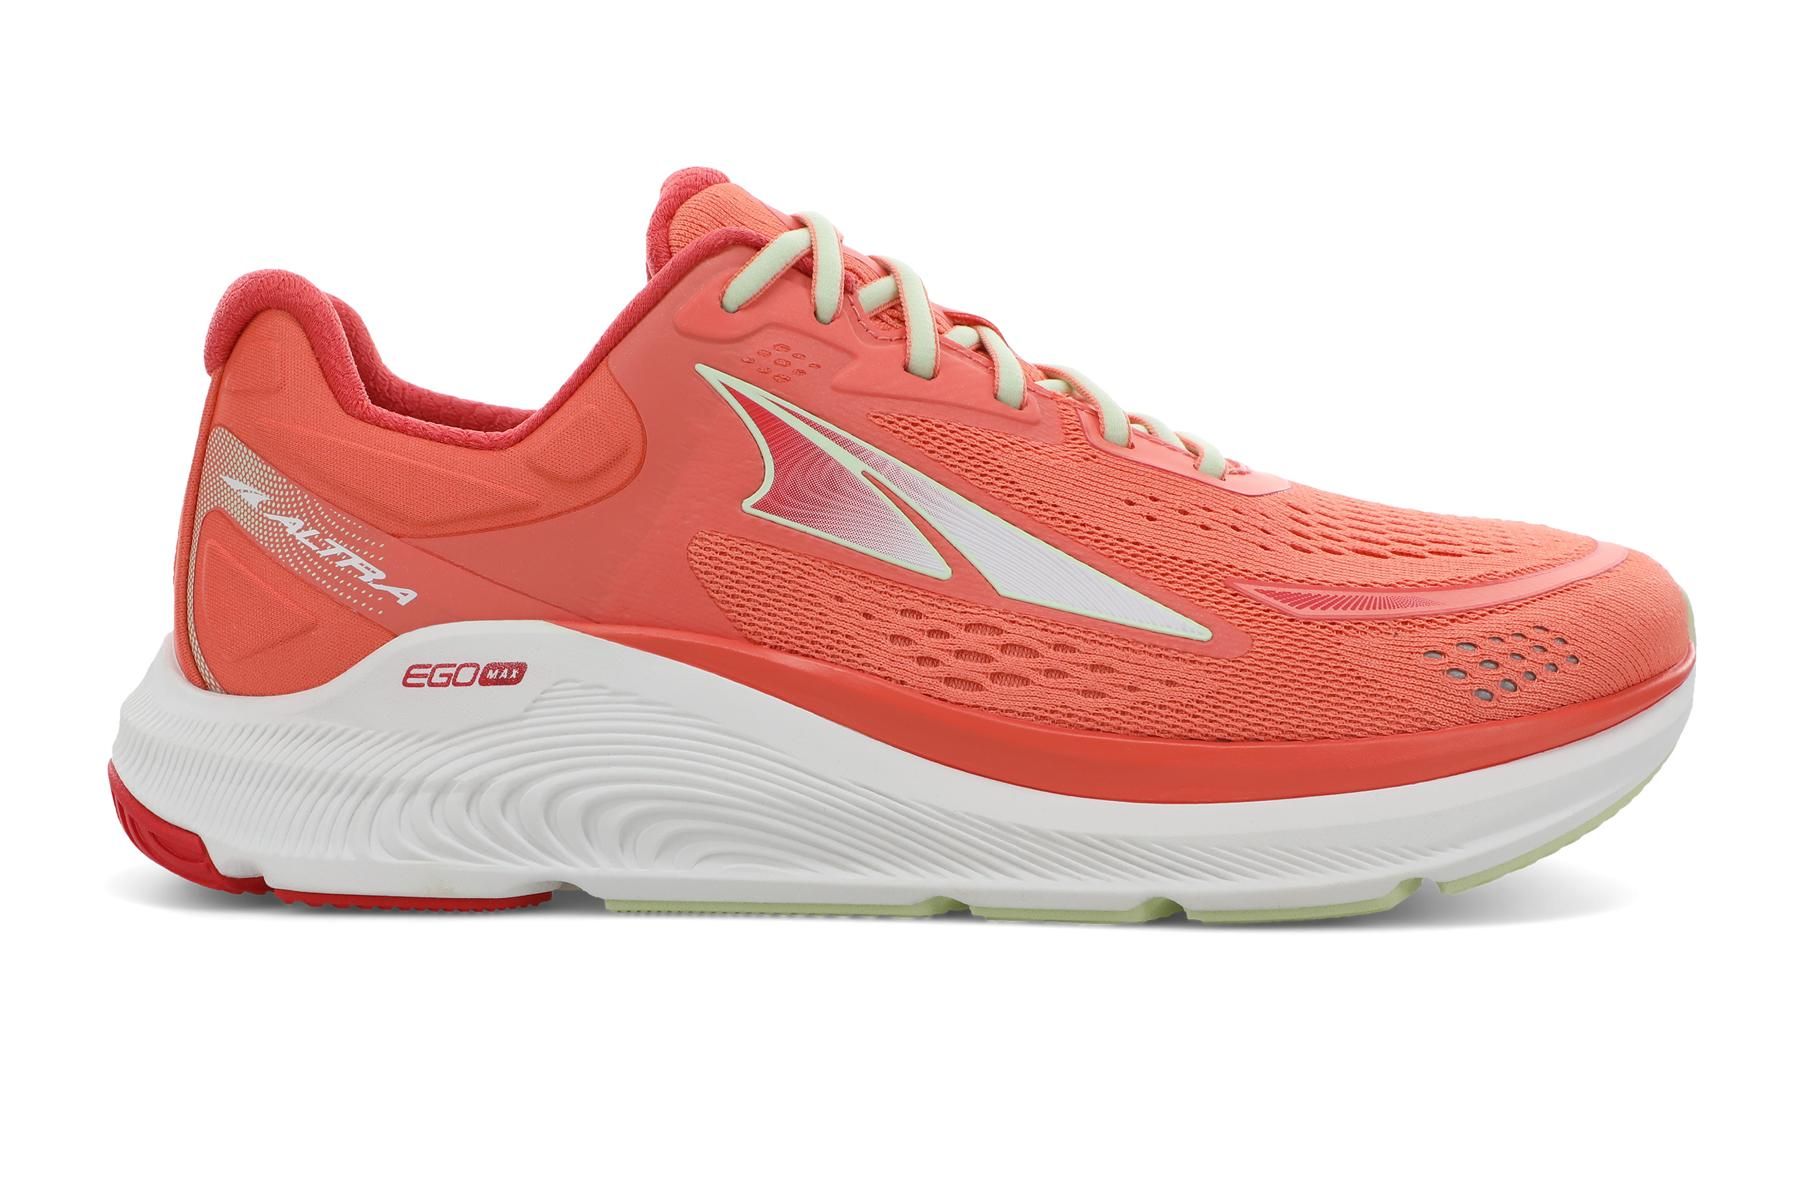  Nike Geile Hintergrundbild 1800x1200. ALTRA Paradigm 6 Runningschuh Damen online kaufen bei Aktivsport.de